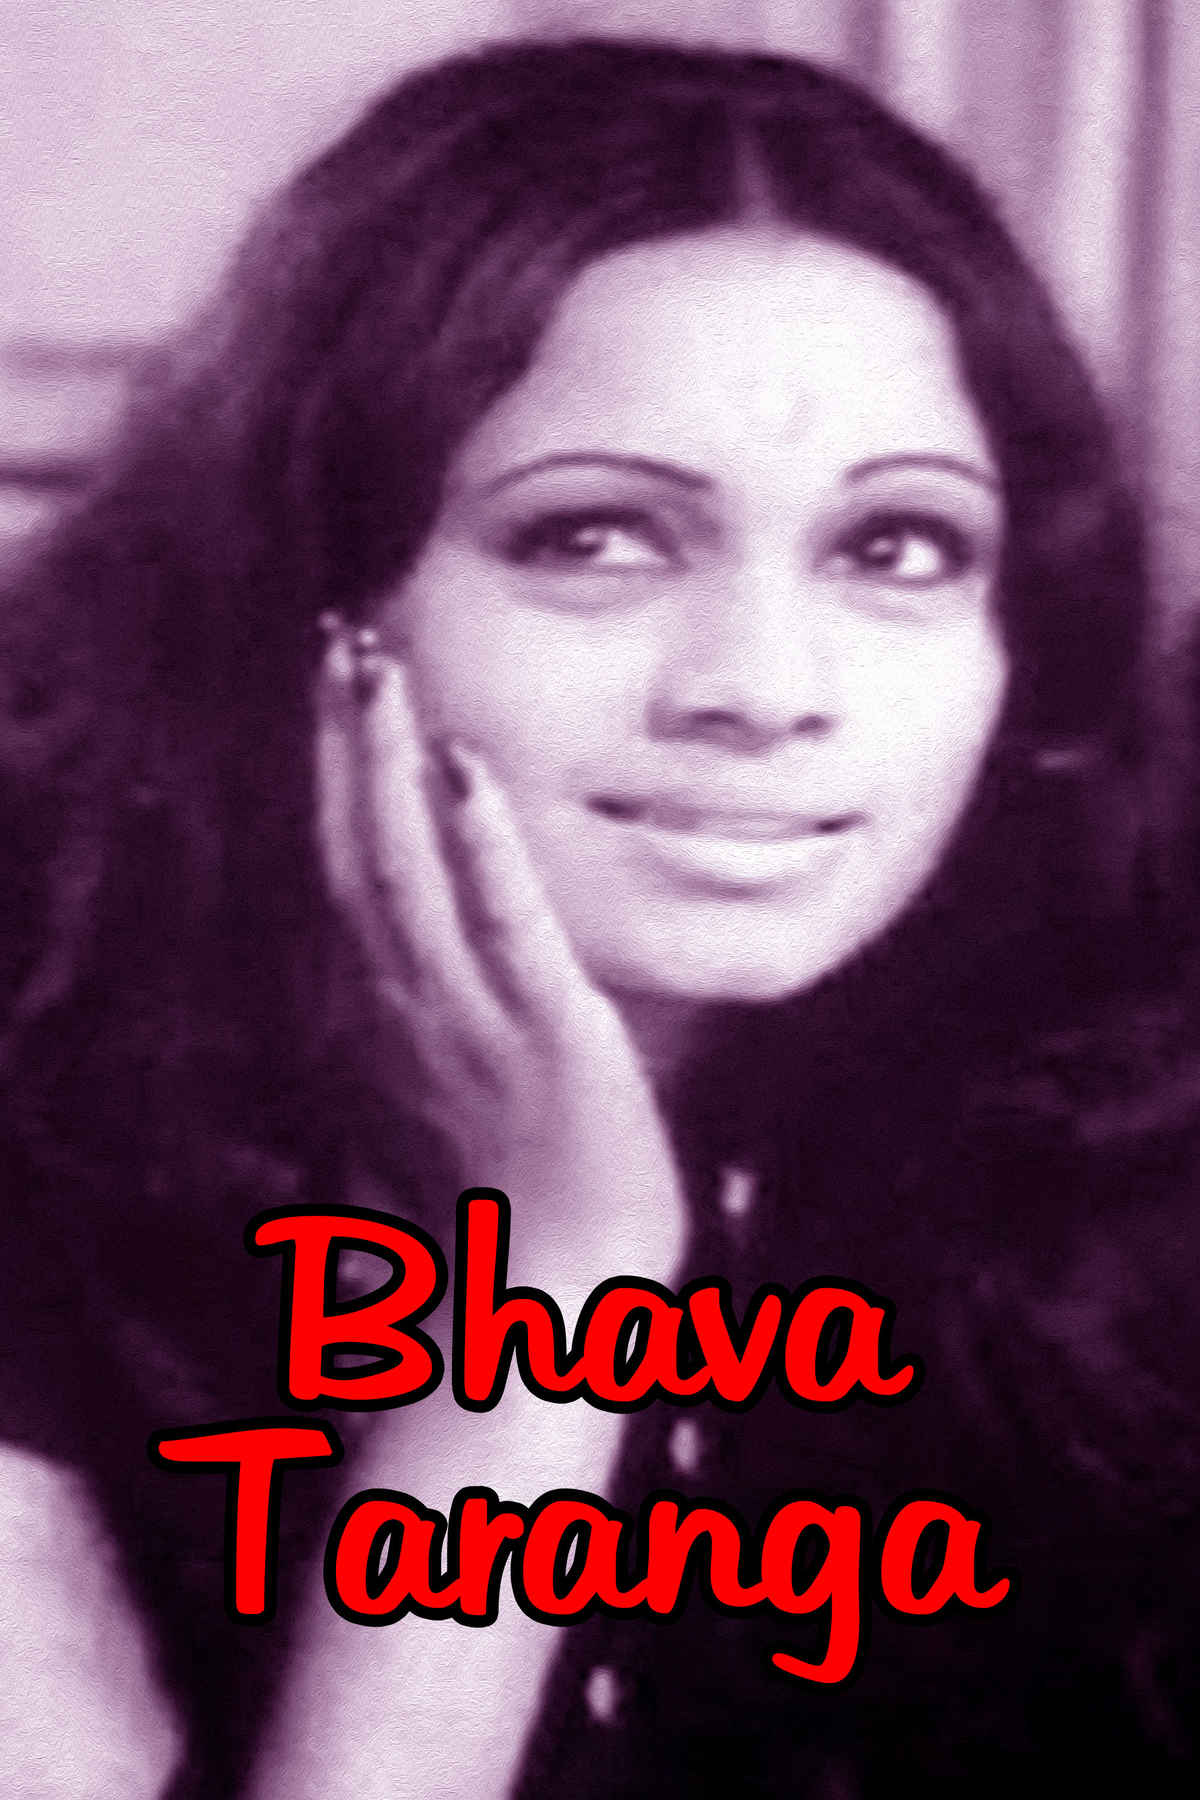 Bhava Taranga